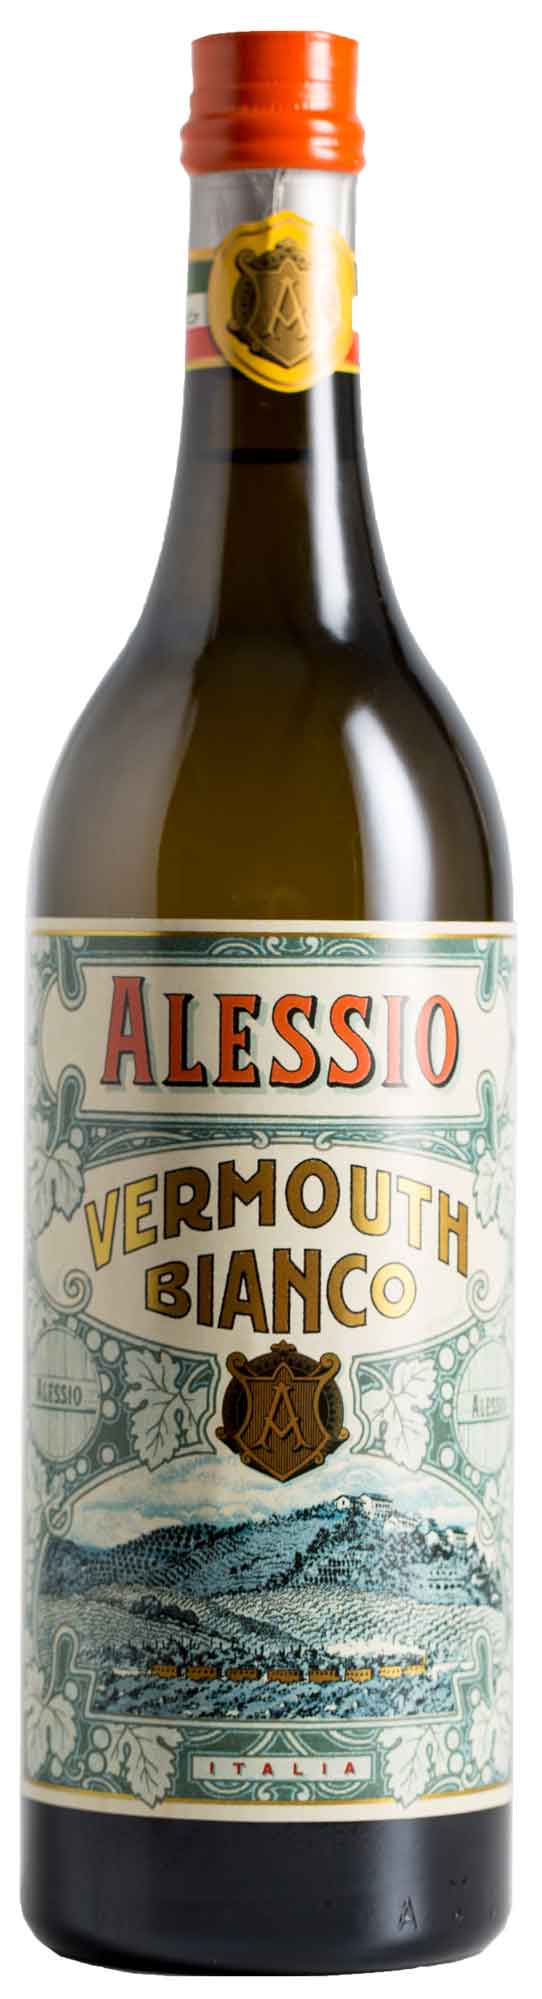 Alessio - Vermouth Blanco (750ml) (750ml)